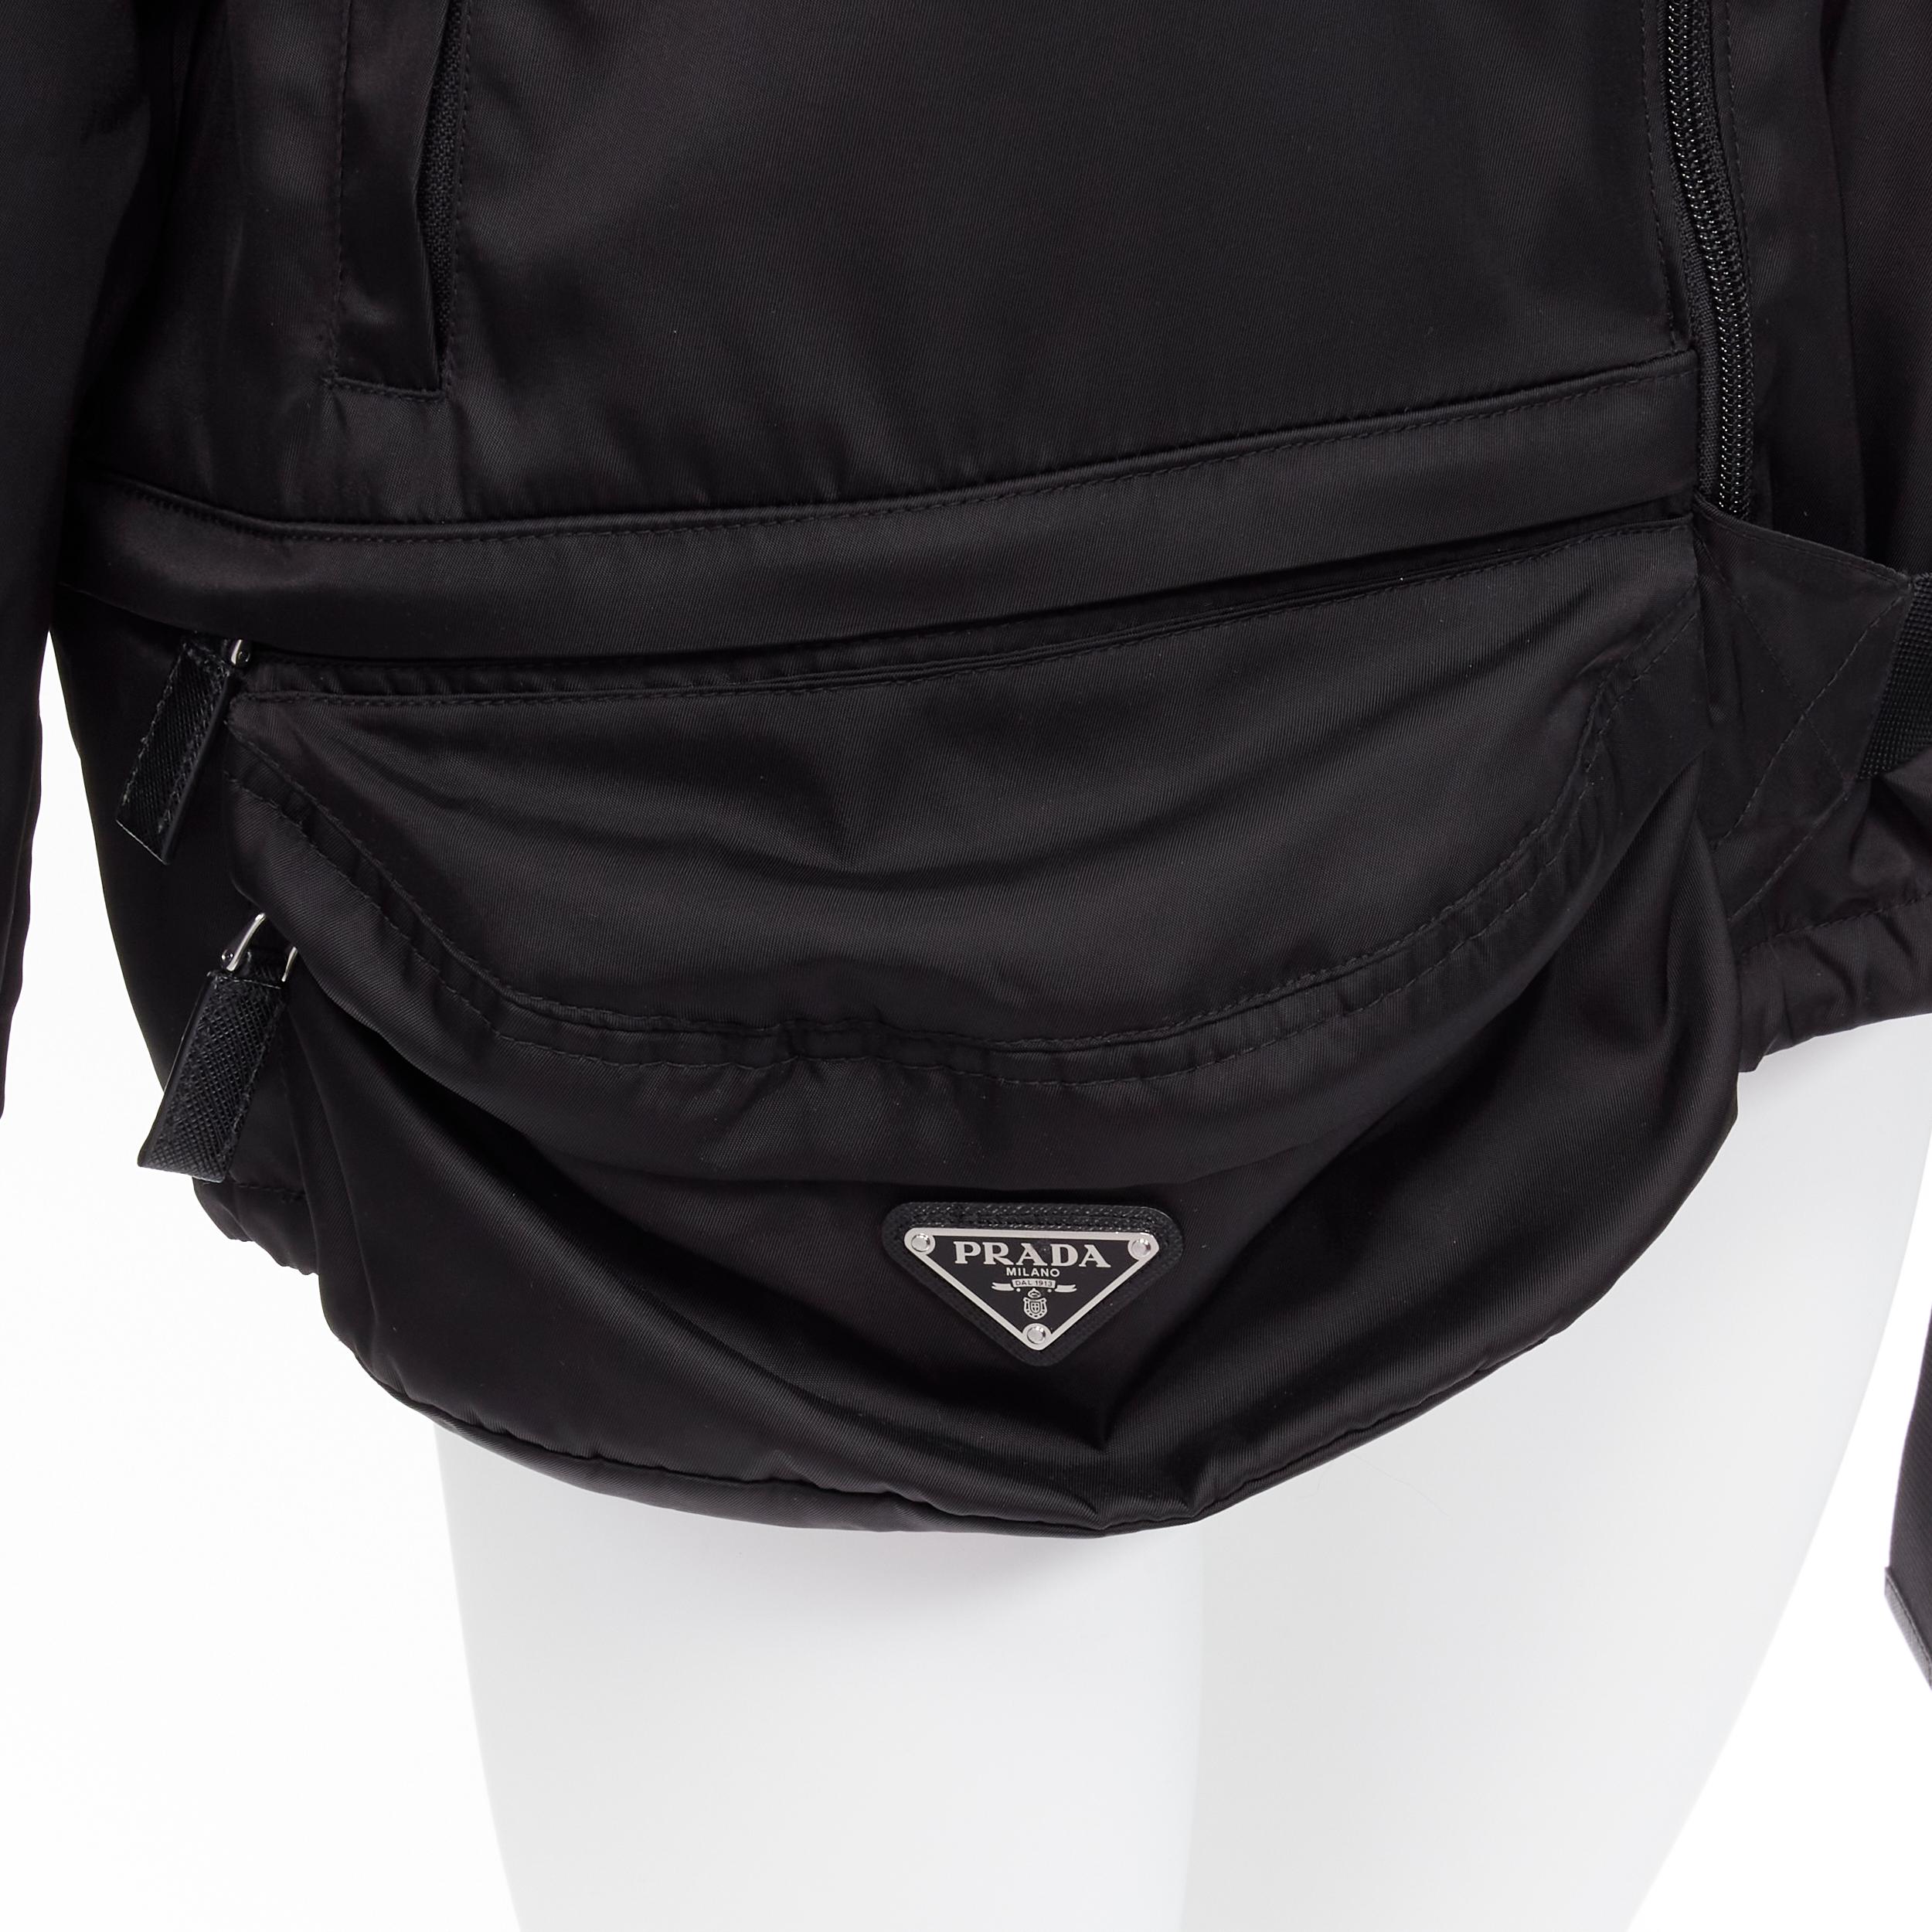 PRADA 2019 black nylon triangle logo waist bag buckle hooded windbreaker jacket IT36 XXS
Reference: TGAS/D00125
Brand: Prada
Designer: Miuccia Prada
Collection: 2019
Material: Nylon, Metal
Color: Black
Pattern: Solid
Closure: Zip
Lining: Black